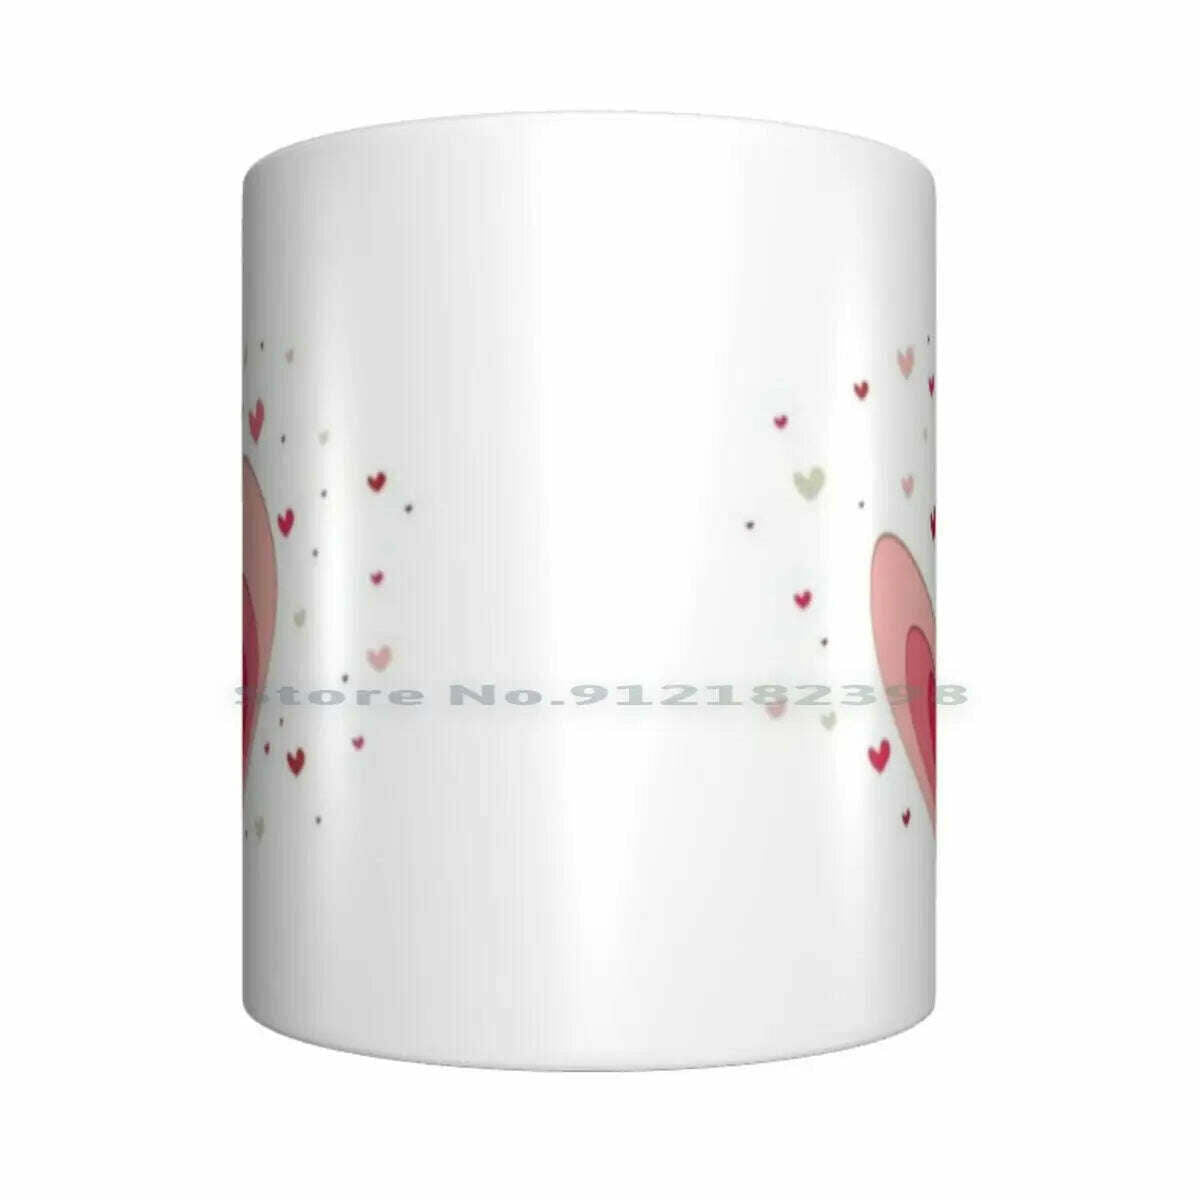 Papercut-Hearts Ceramic Mugs Coffee Cups Milk Tea Mug Heart Hearts Papercut Pink Red Love Mother Day Saint Valentin Romantic, KIMLUD Women's Clothes